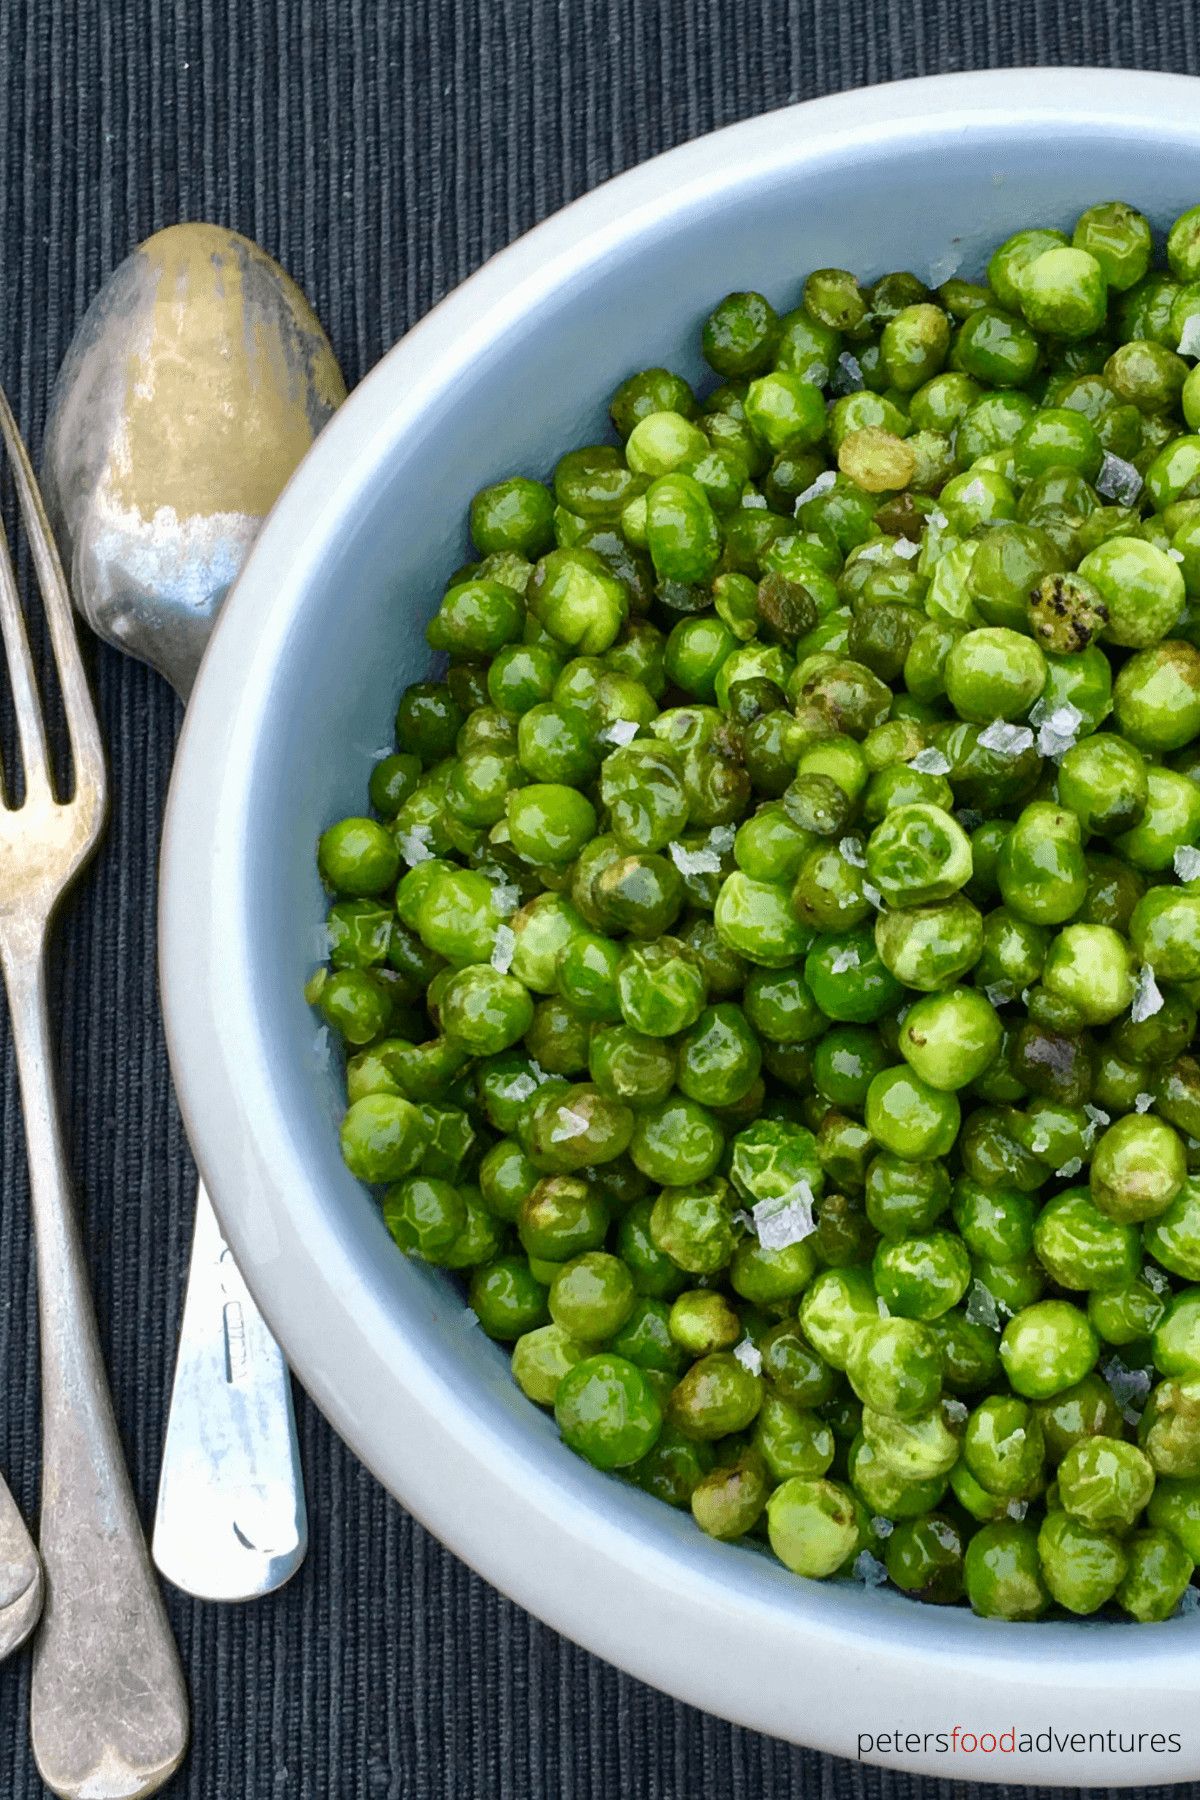 Fried Green Peas, Best Side Dish Ever! Tender Yet Crispy, Green Peas recipe, Sautéed in Butter. (Жареный зеленый горох)